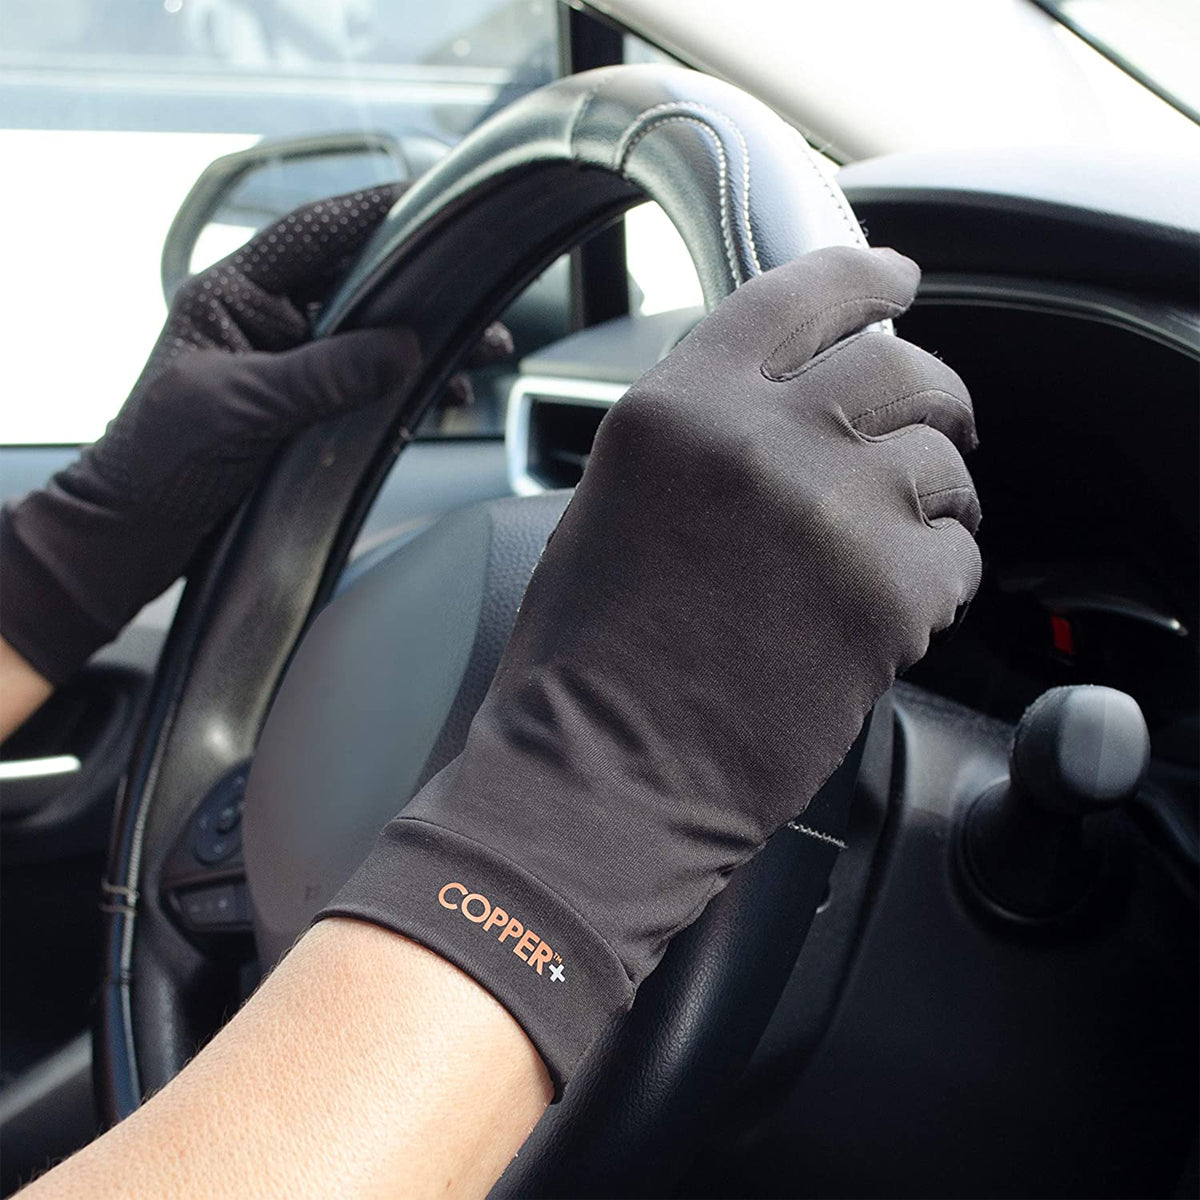 Copper+ Grip Gloves – Nonslip Textured, Touchscreen Compatible